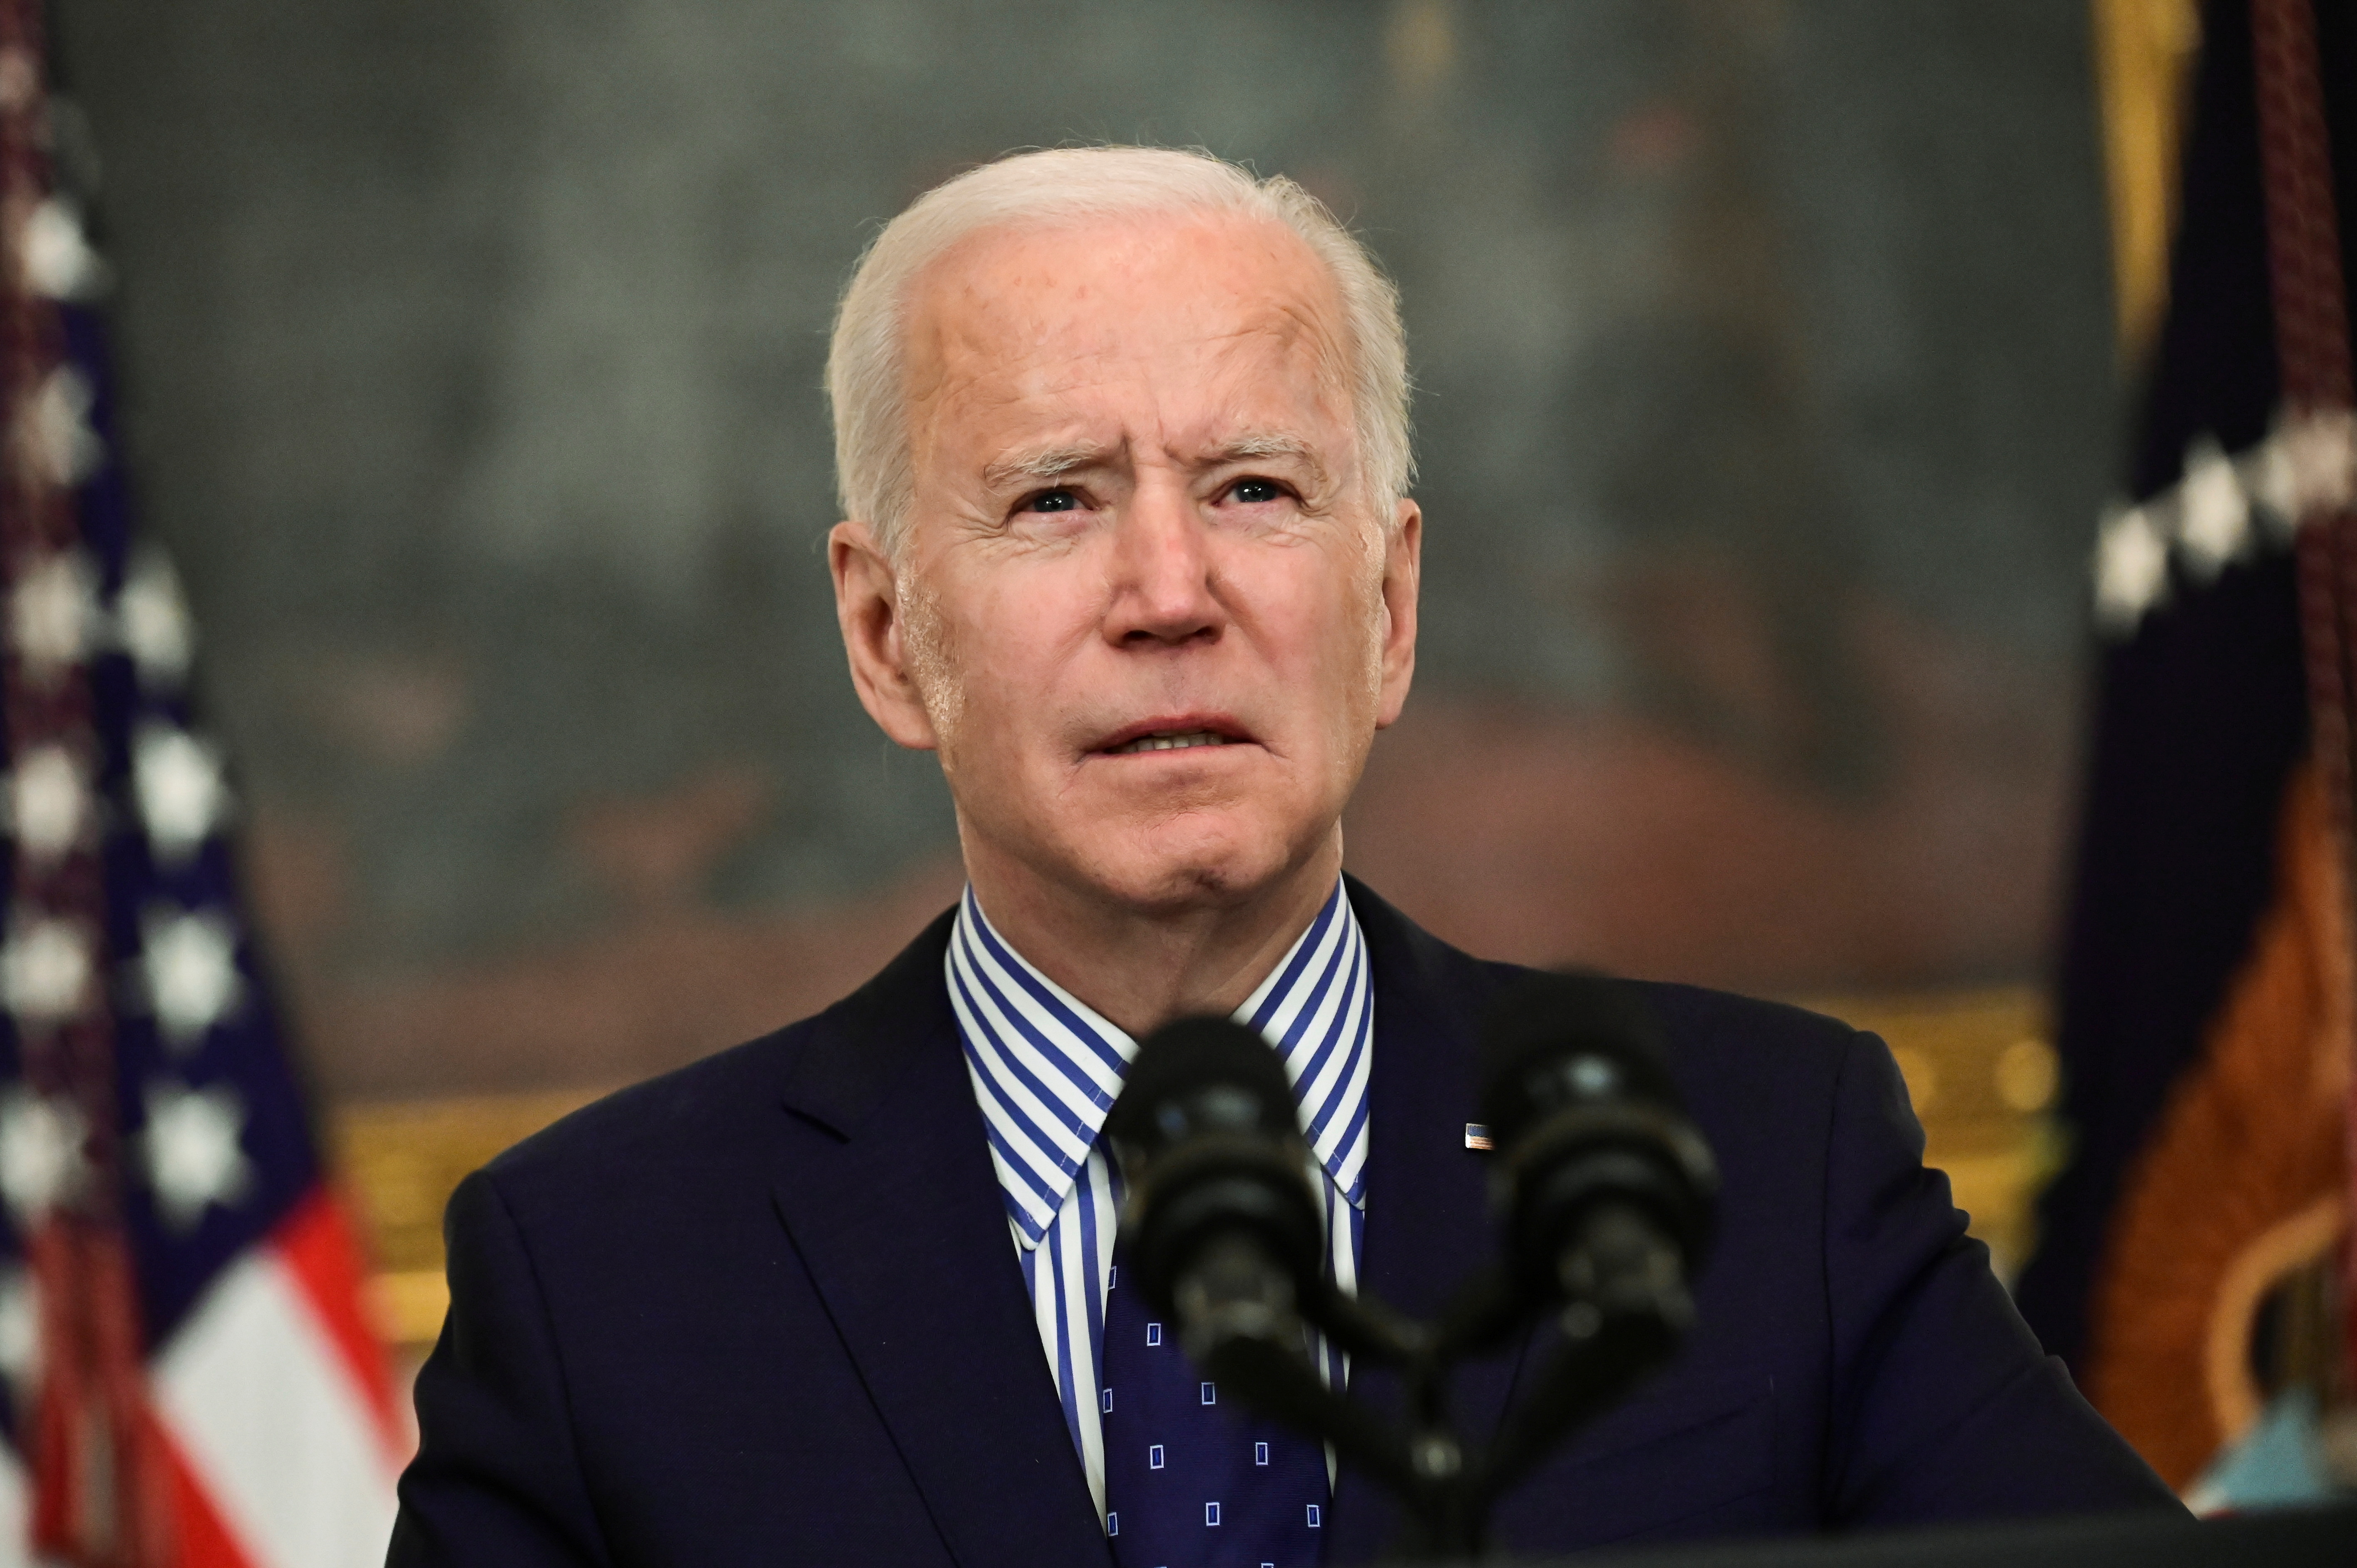 U.S. President Joe Biden makes remarks from the White House after his coronavirus pandemic relief legislation passed in the Senate, in Washington